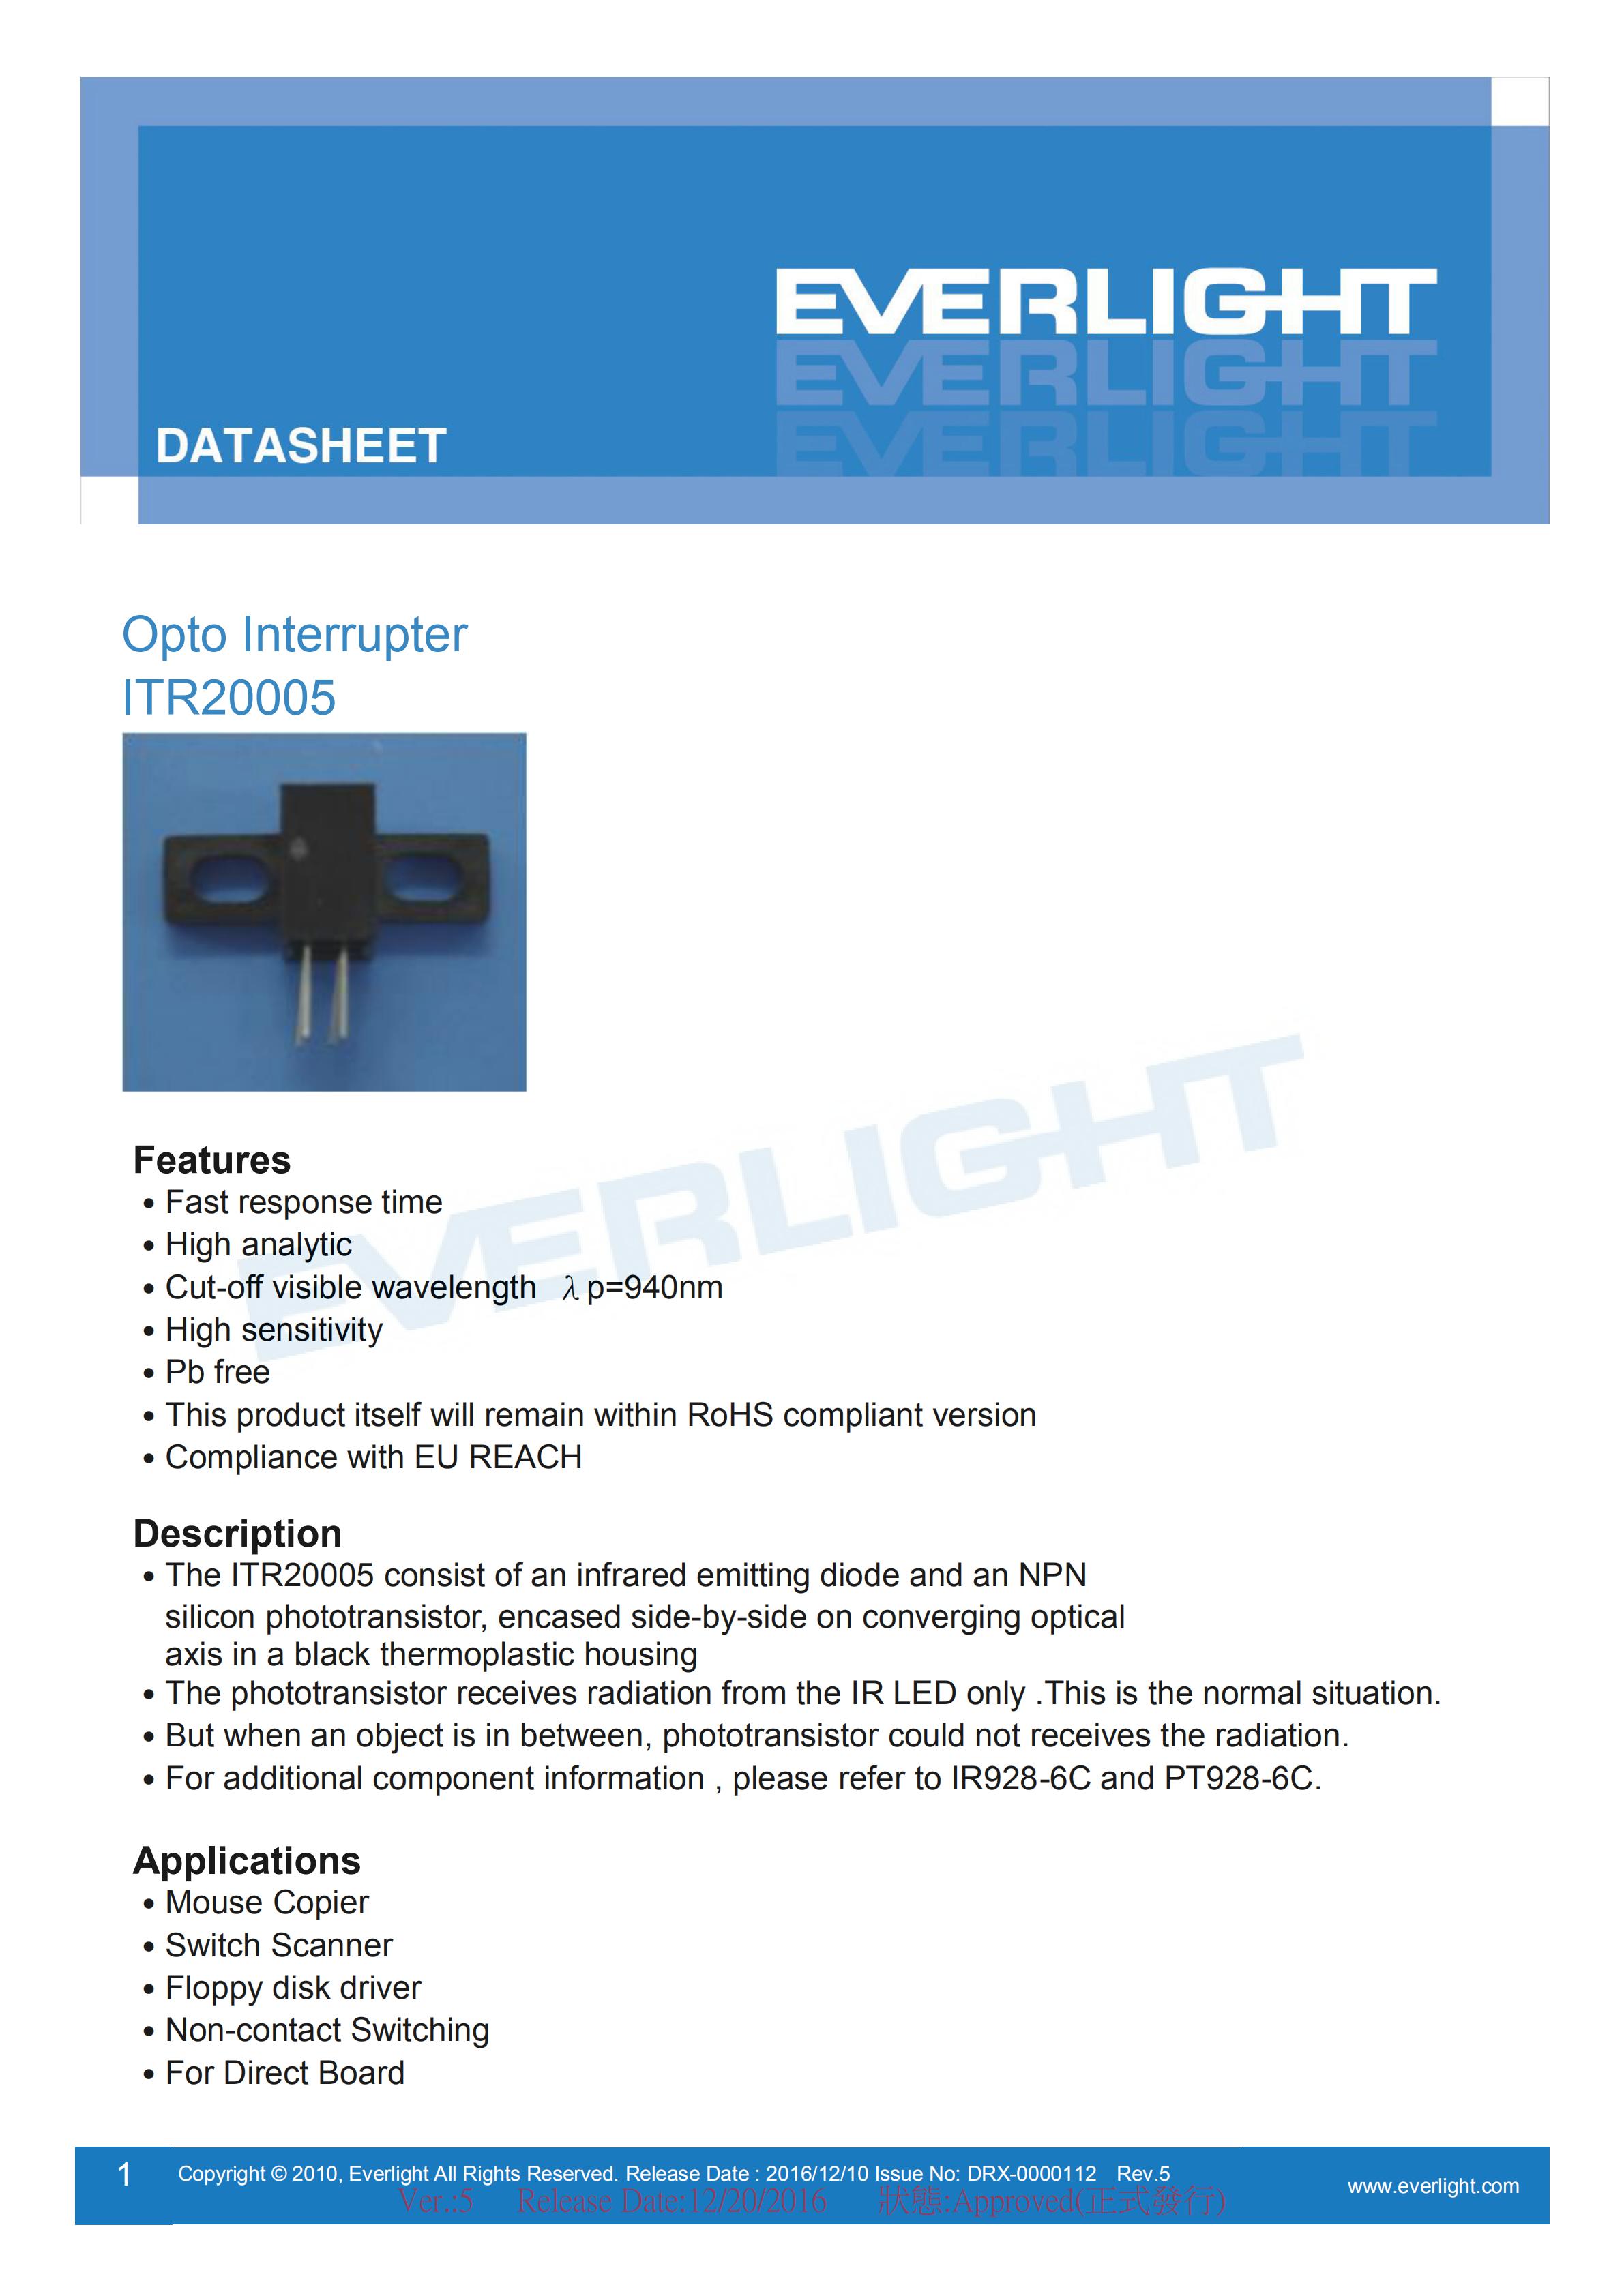 EVERLIGHT Optical Switch ITR20005 Opto Interrupter Datasheet